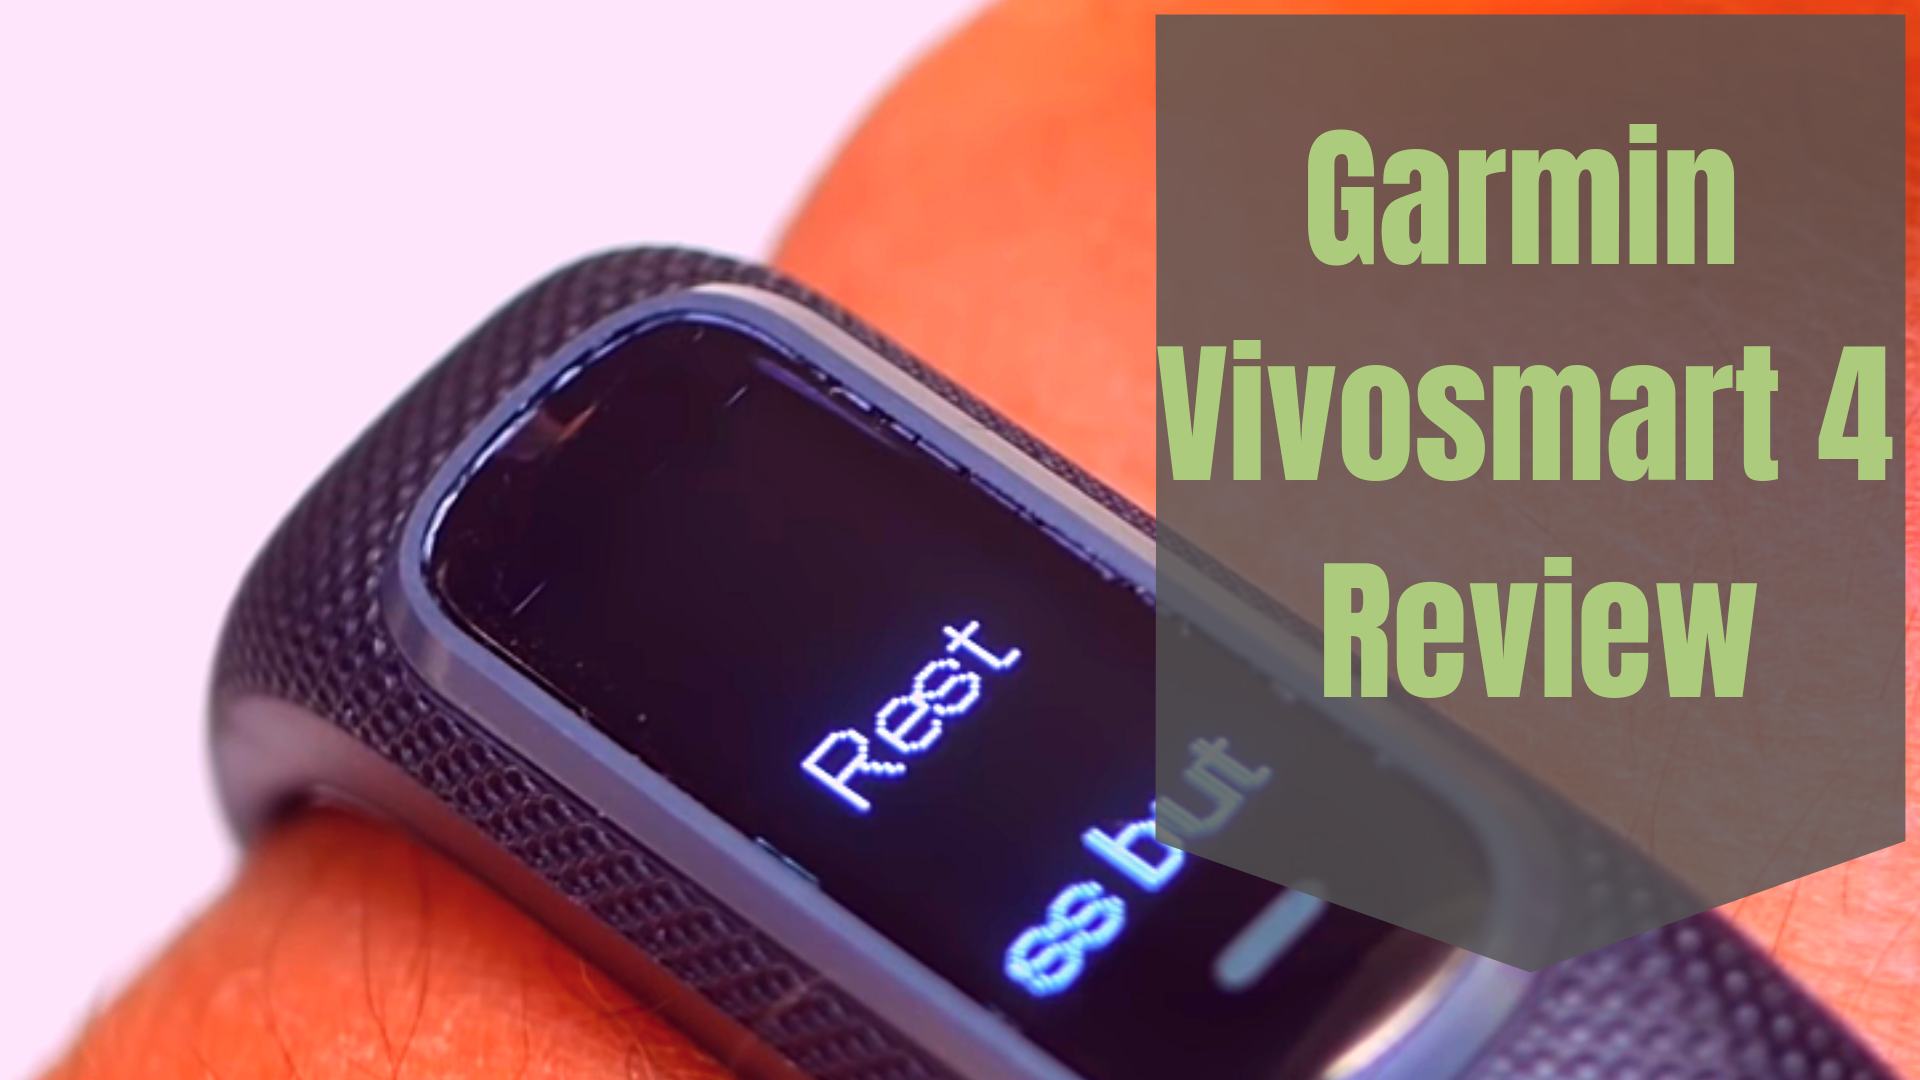 Garmin Vivosmart 4 Review; I'm just doing what we're told 19